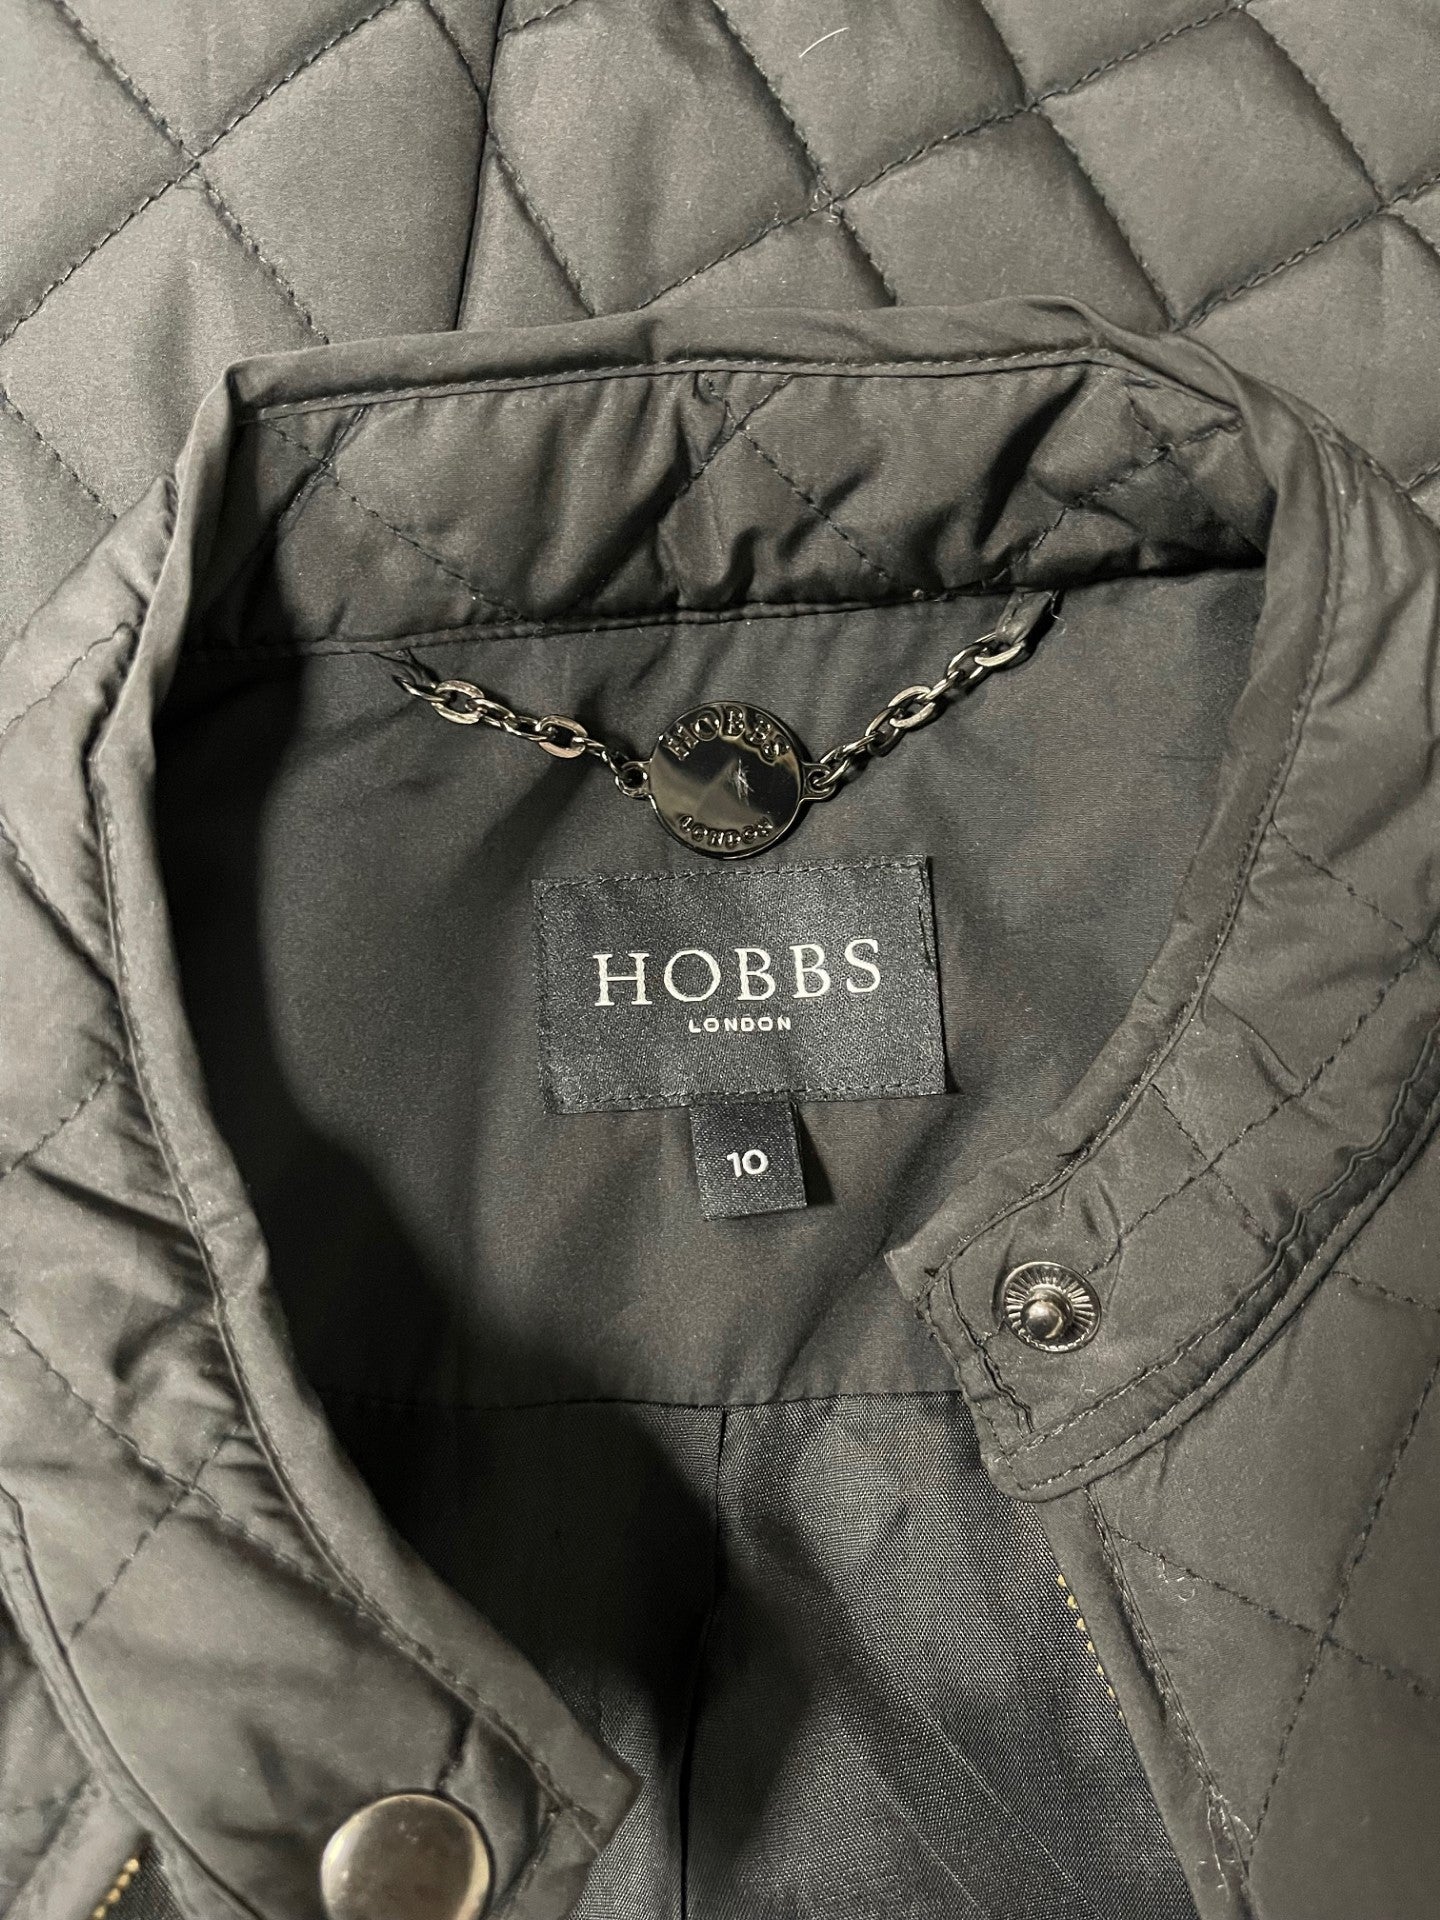 Hobbs Black Quilted Jacket Size 10 – Shop for Shelter